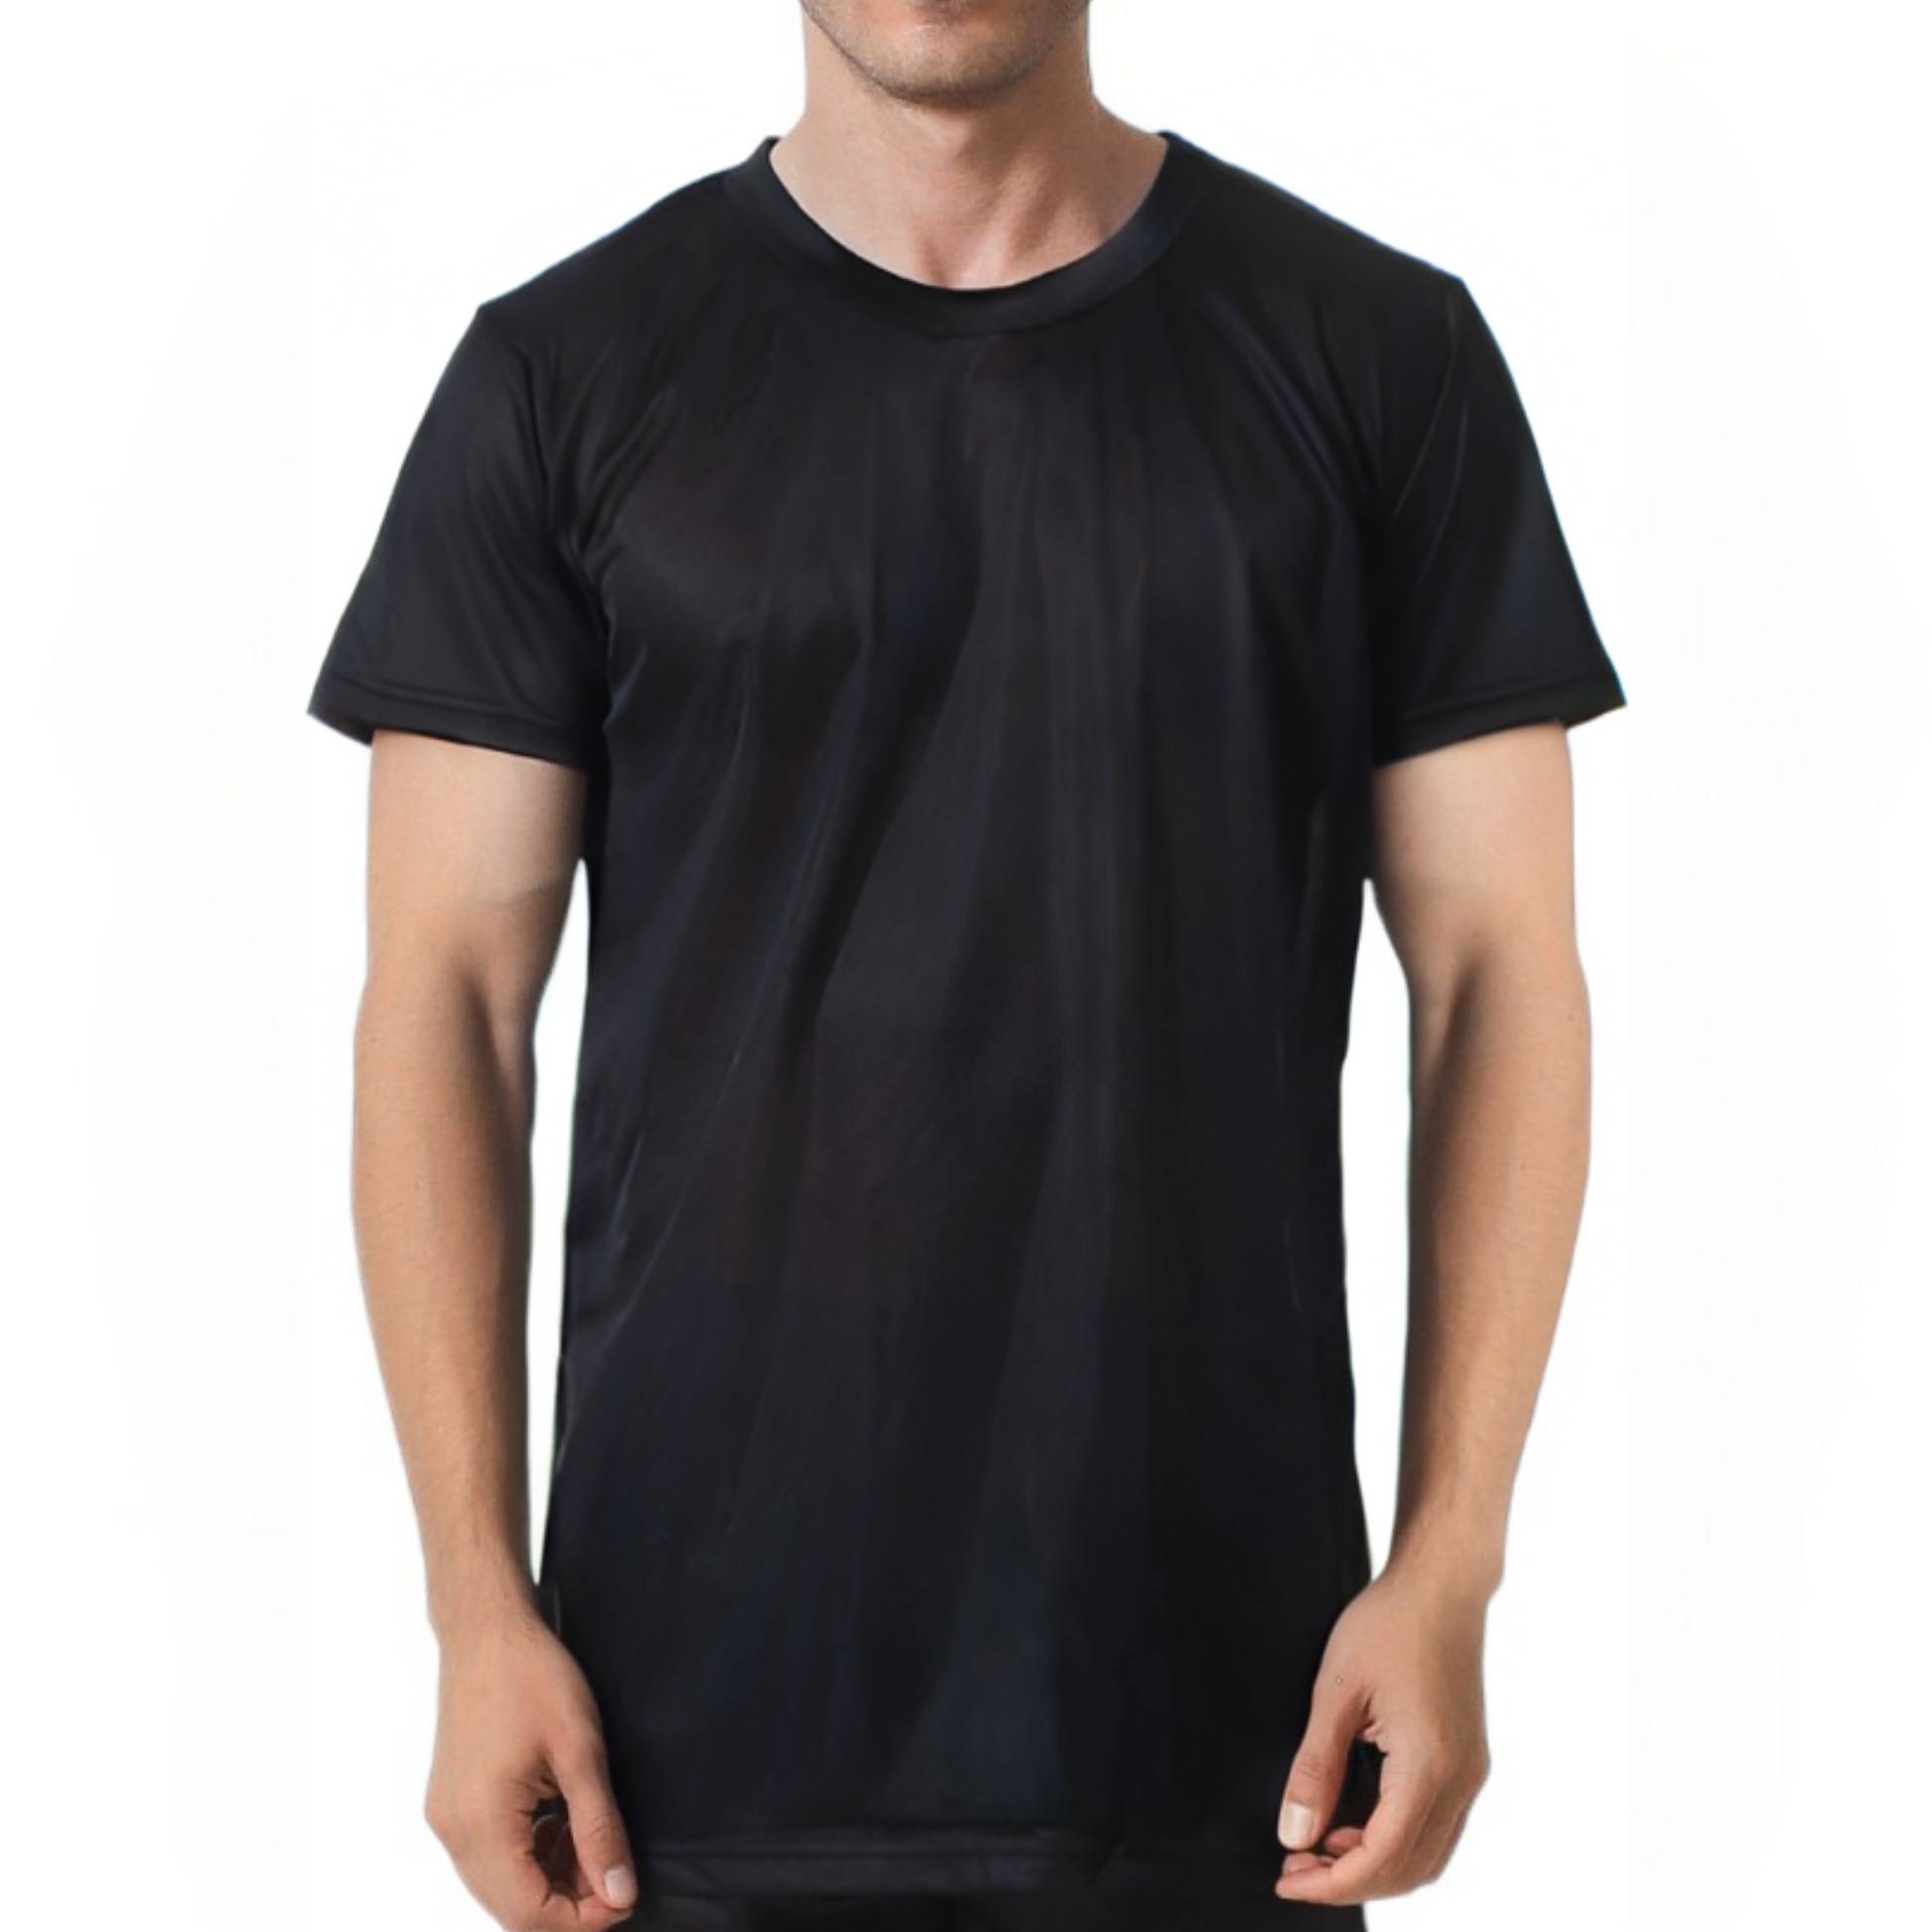 Nylon Tricot Crew Neck T-shirt – Players Underwear - Free Shipping